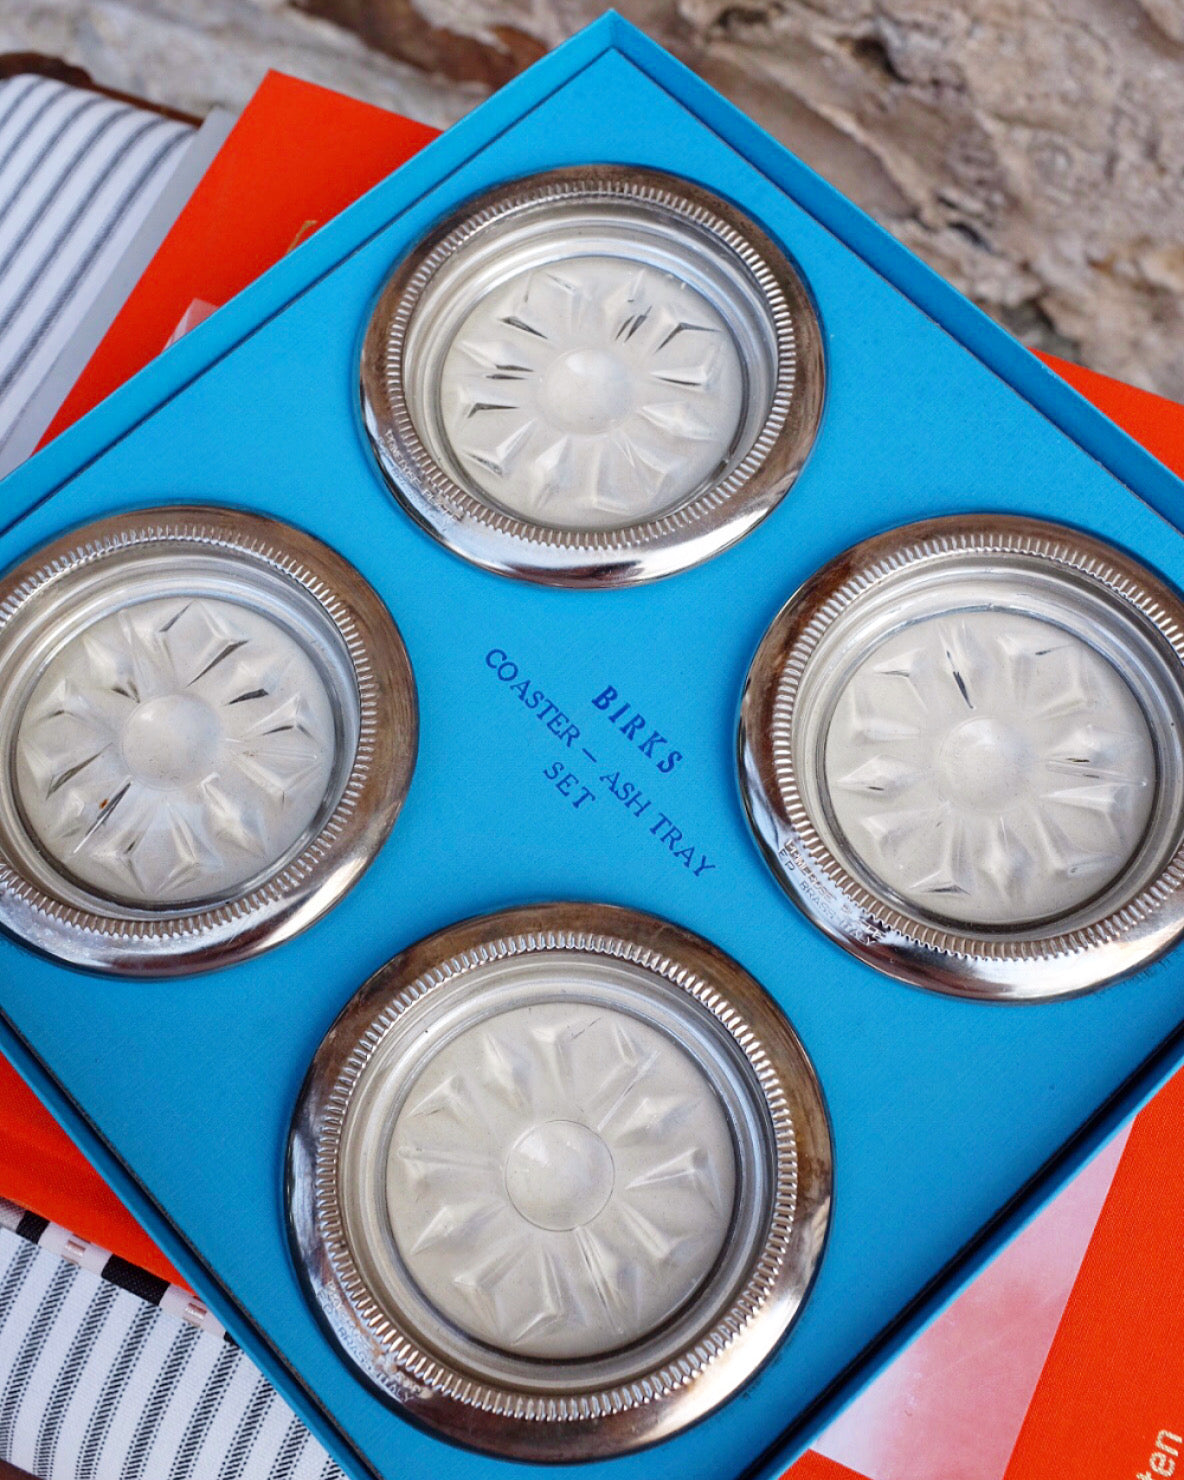 Set of 4 Birks Silver Plate Coasters in Original Box